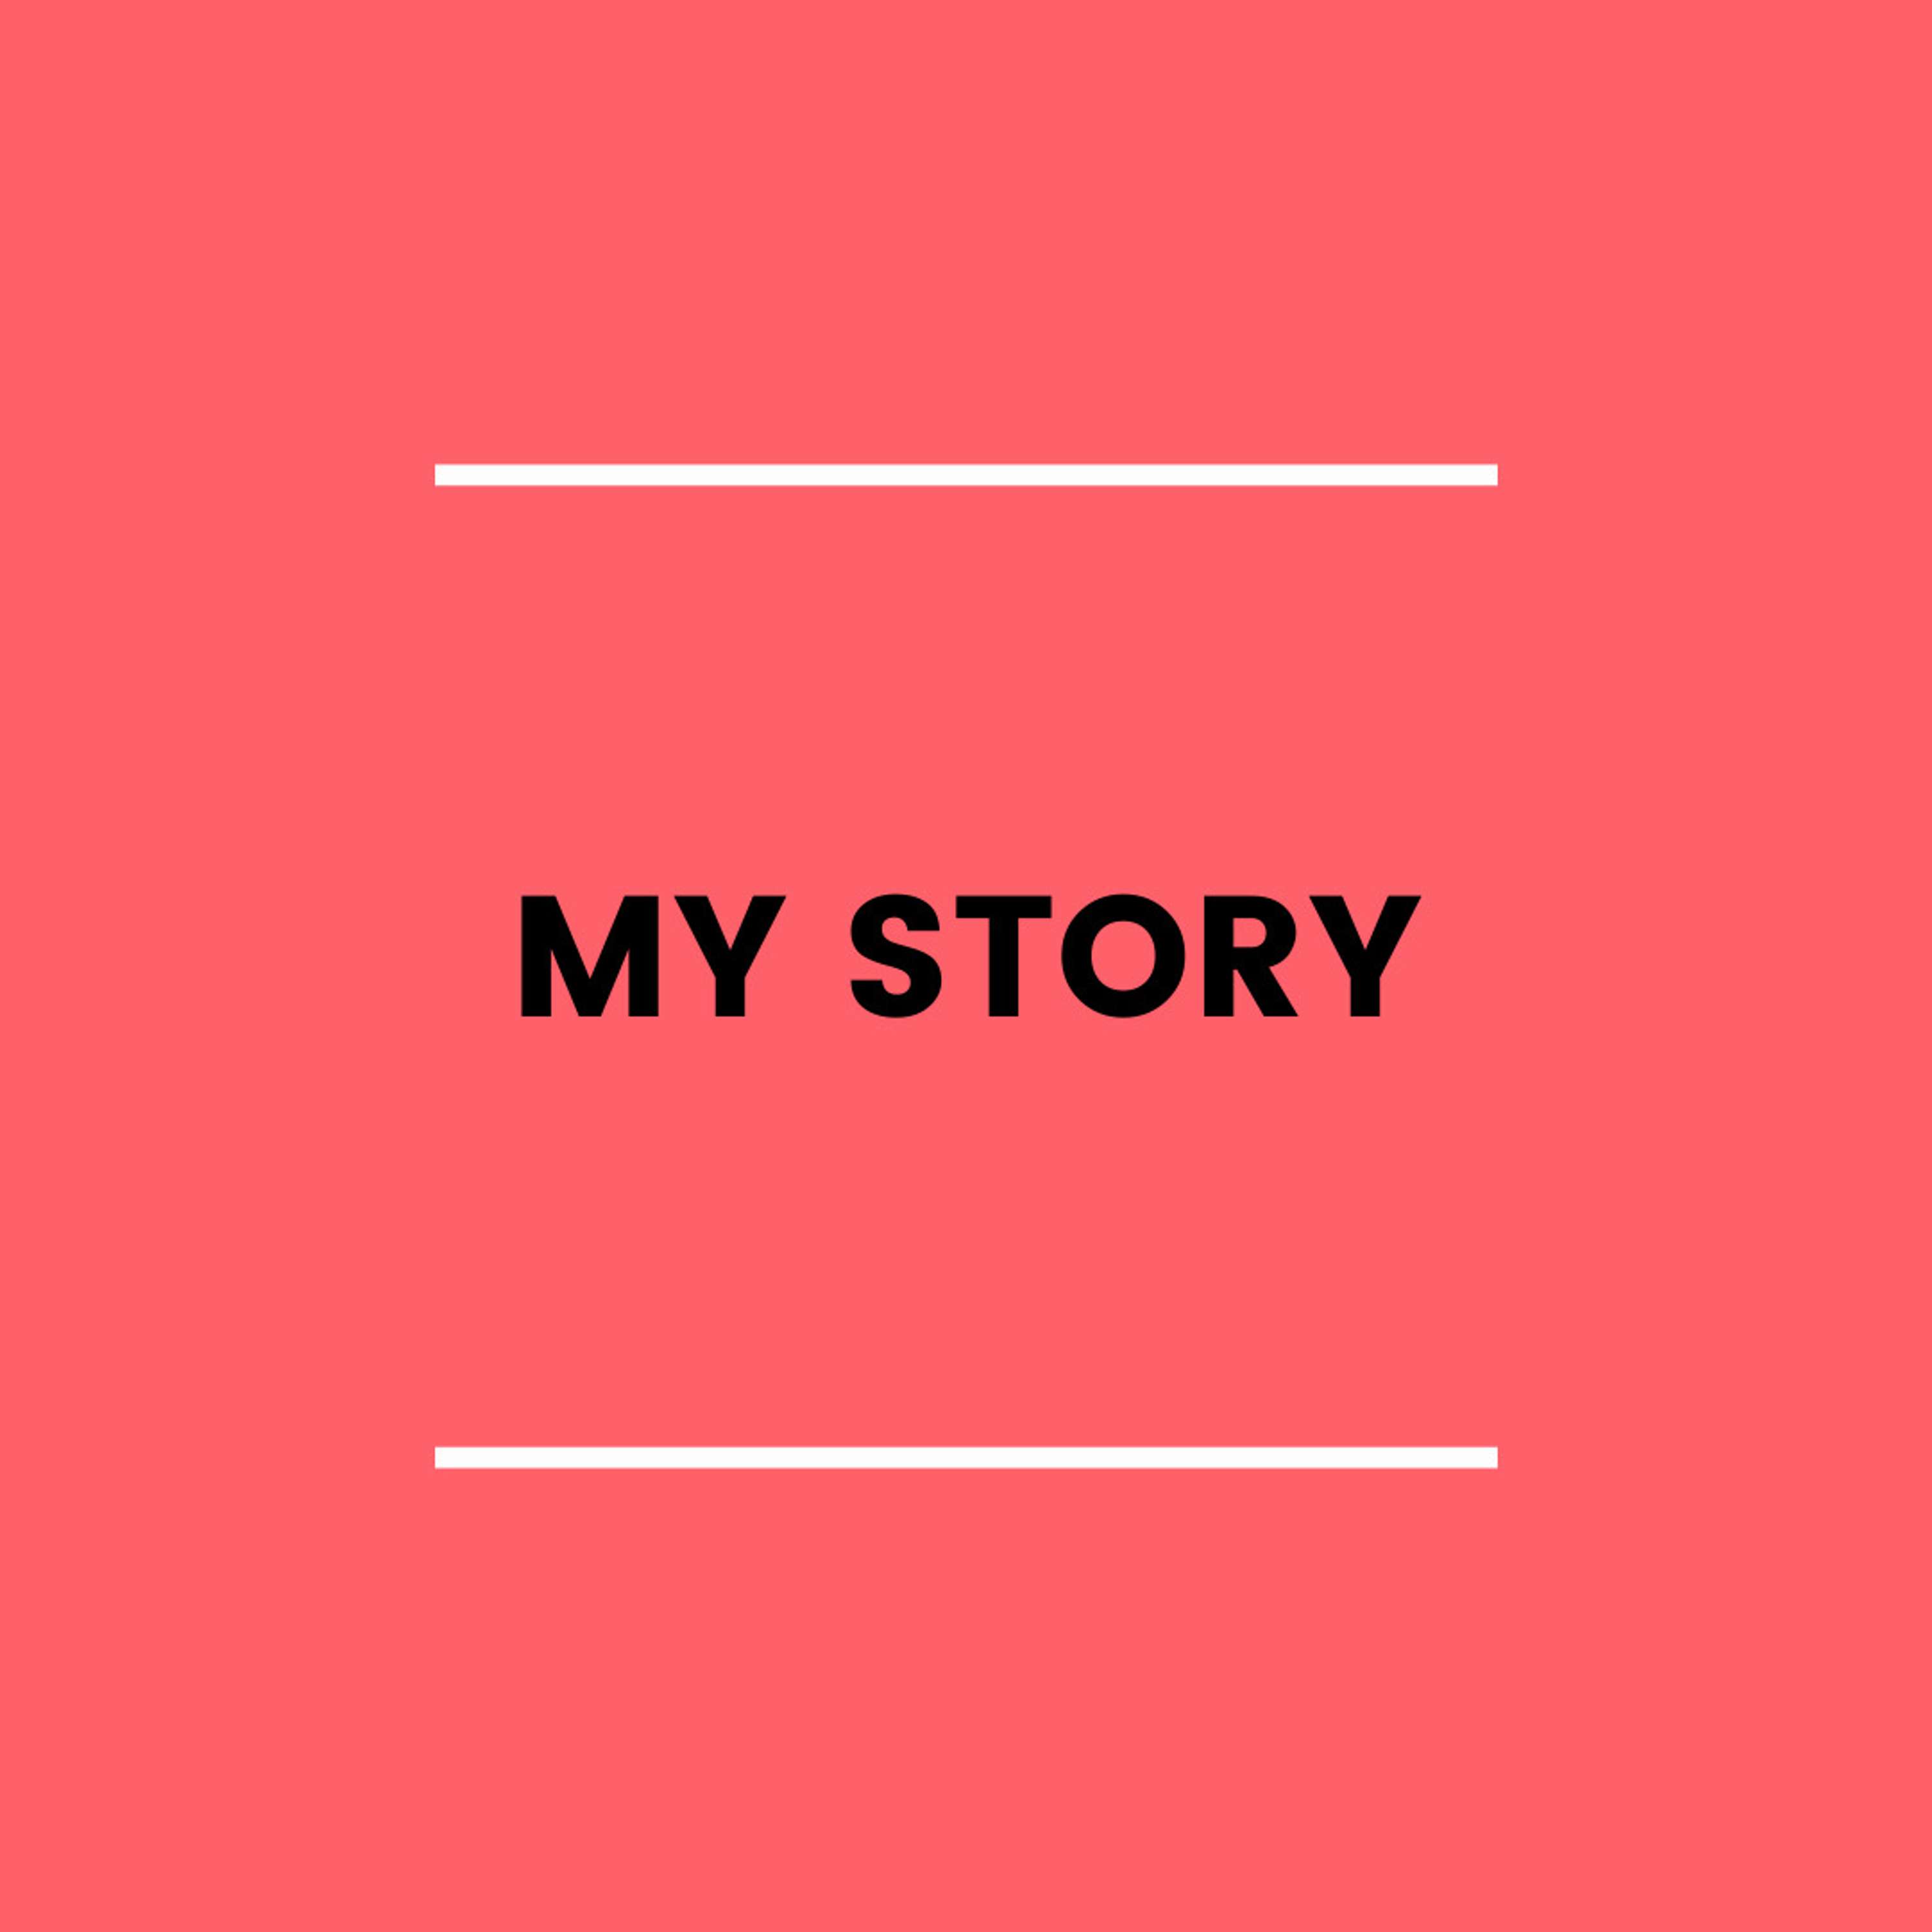 4. My Story